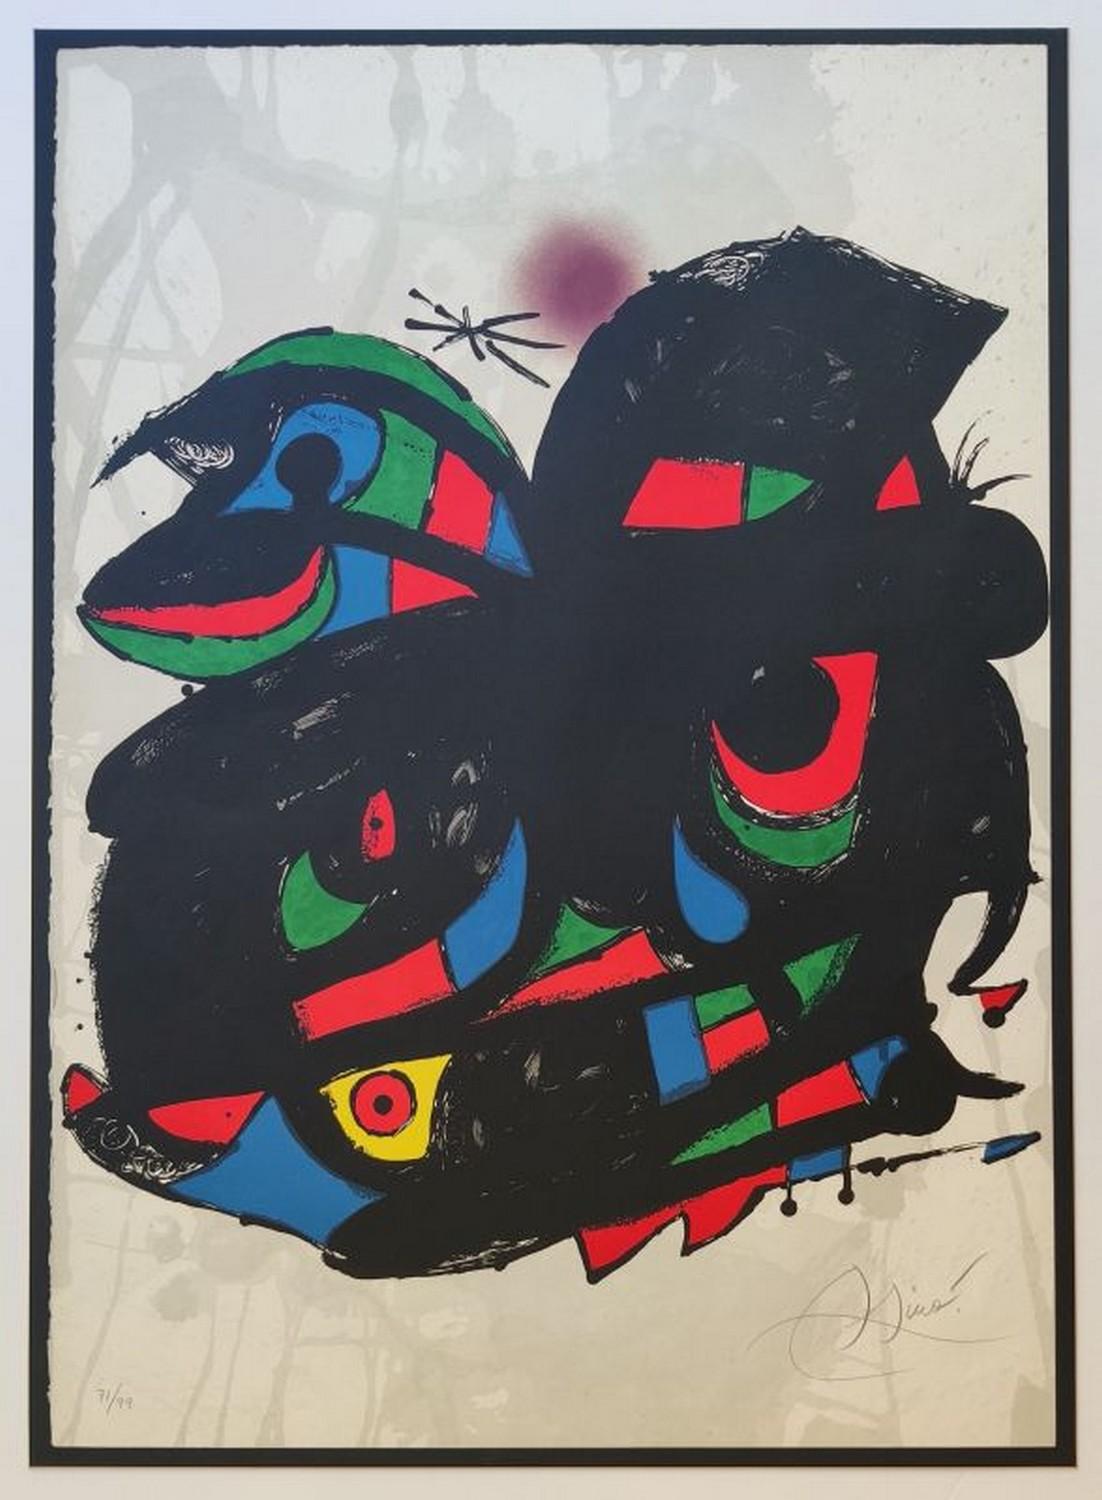 Barcelona  - Print by Joan Miró